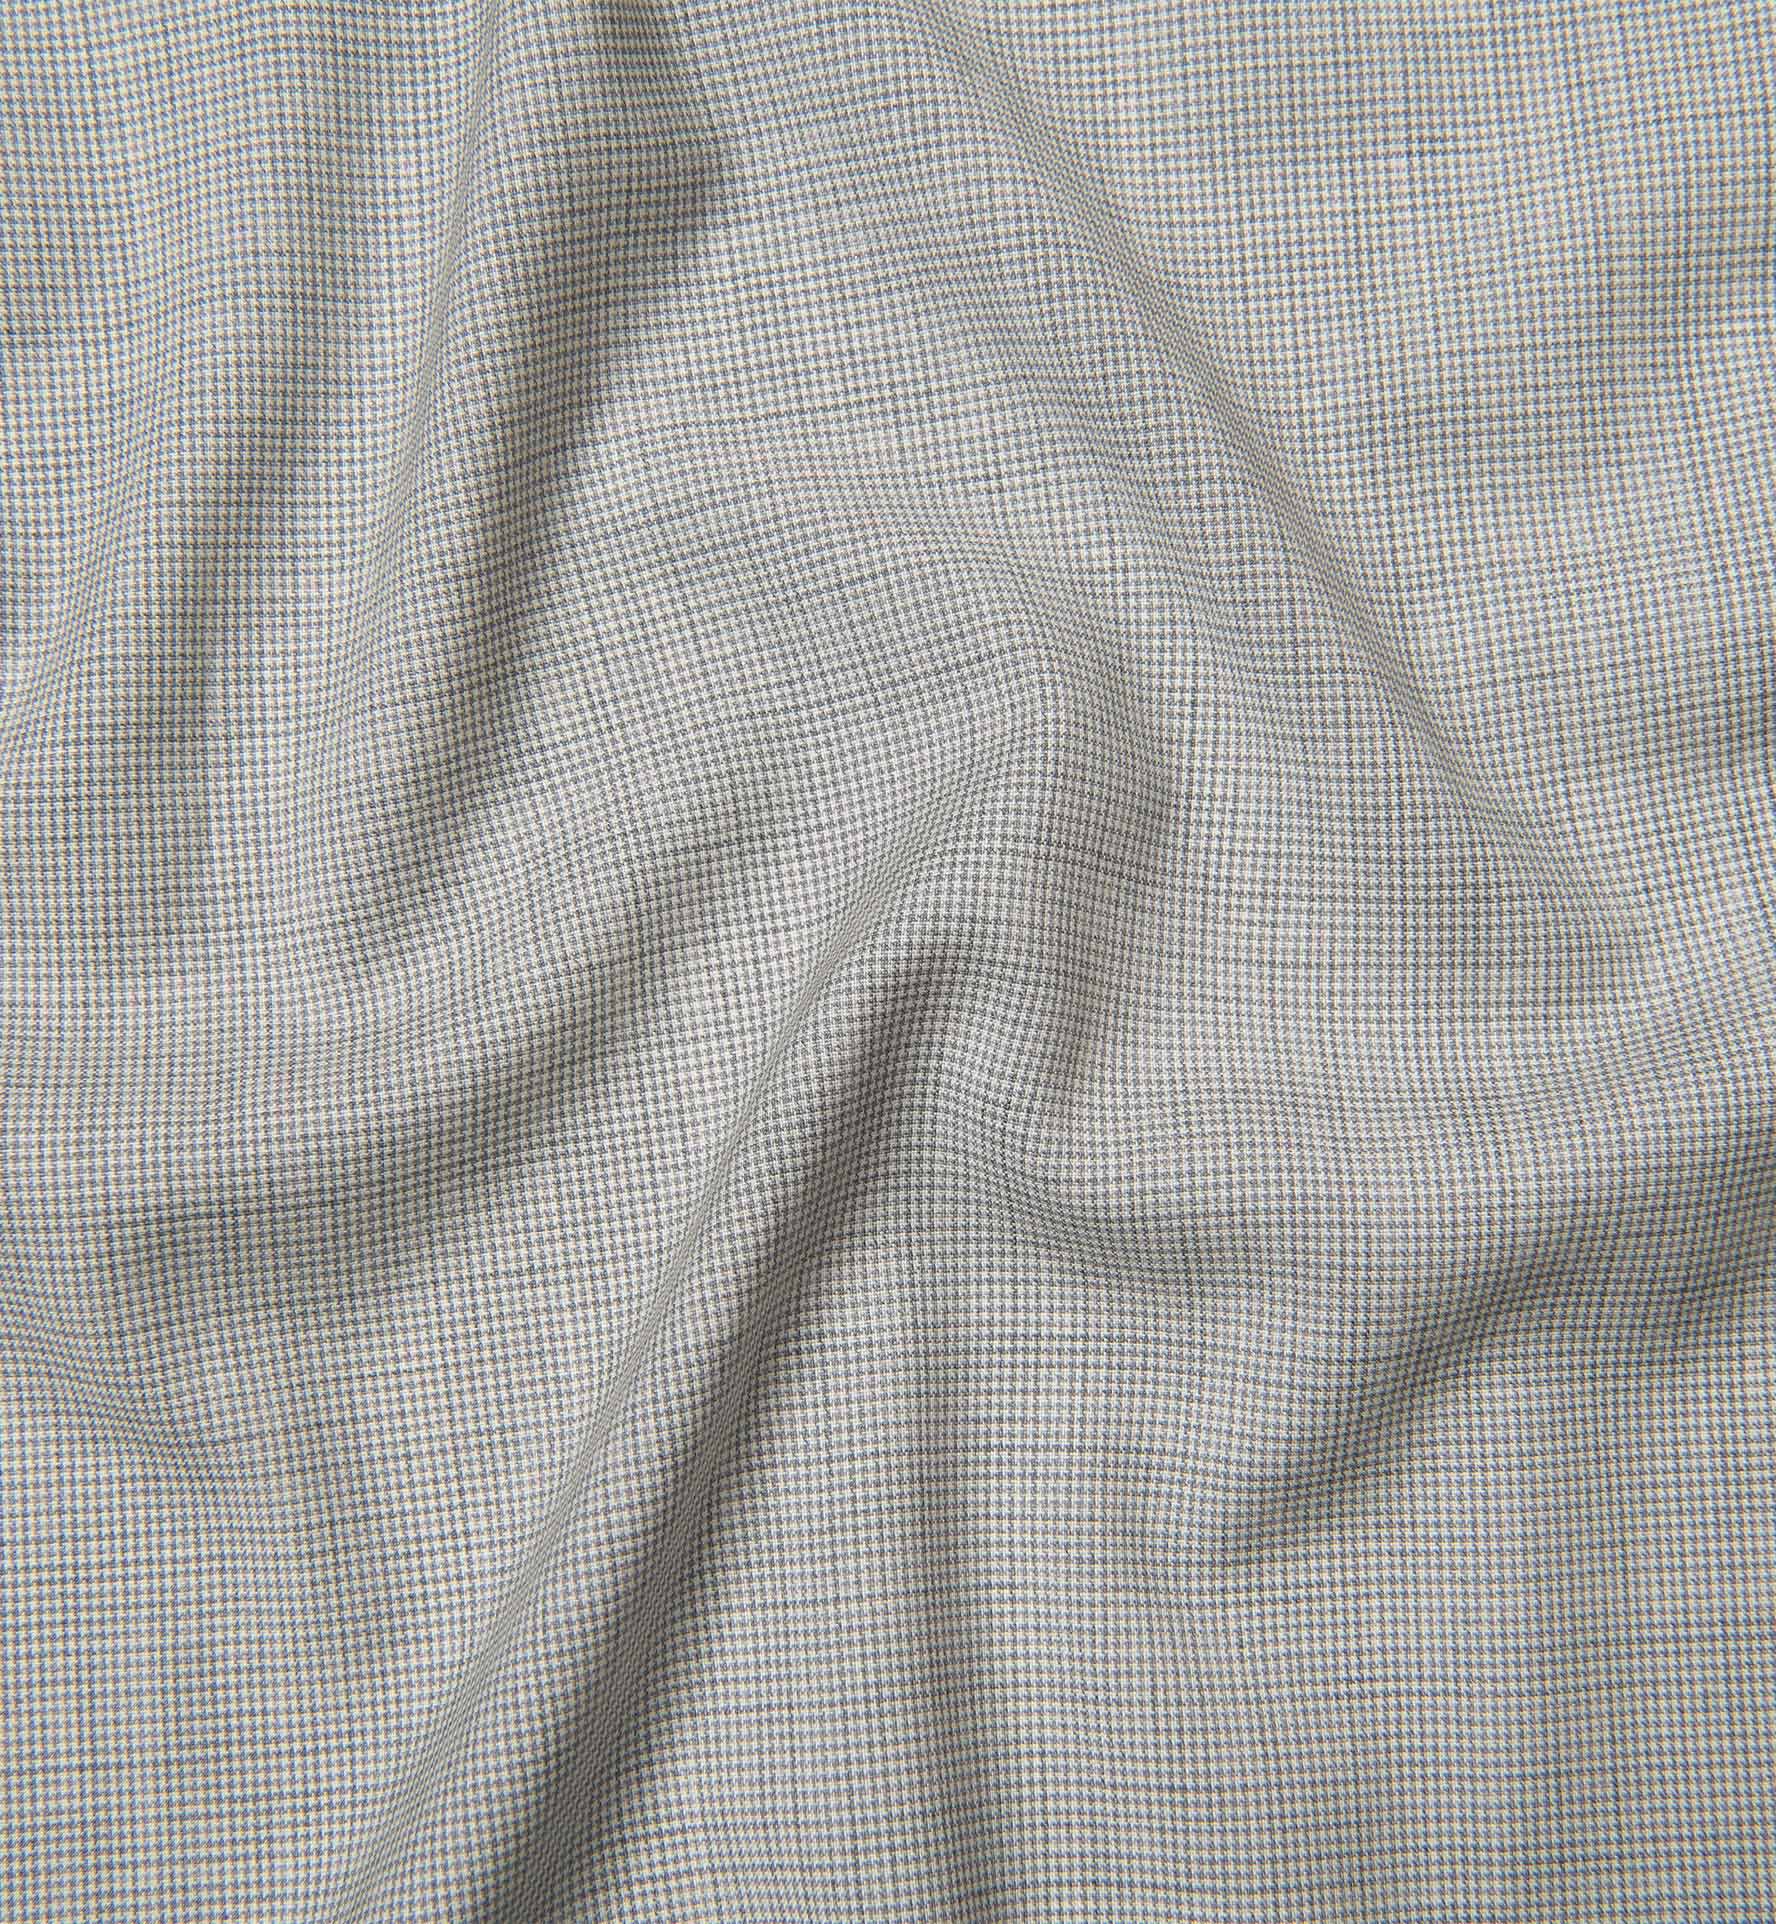 Reda Light Grey Houndstooth Merino Wool Shirts by Proper Cloth